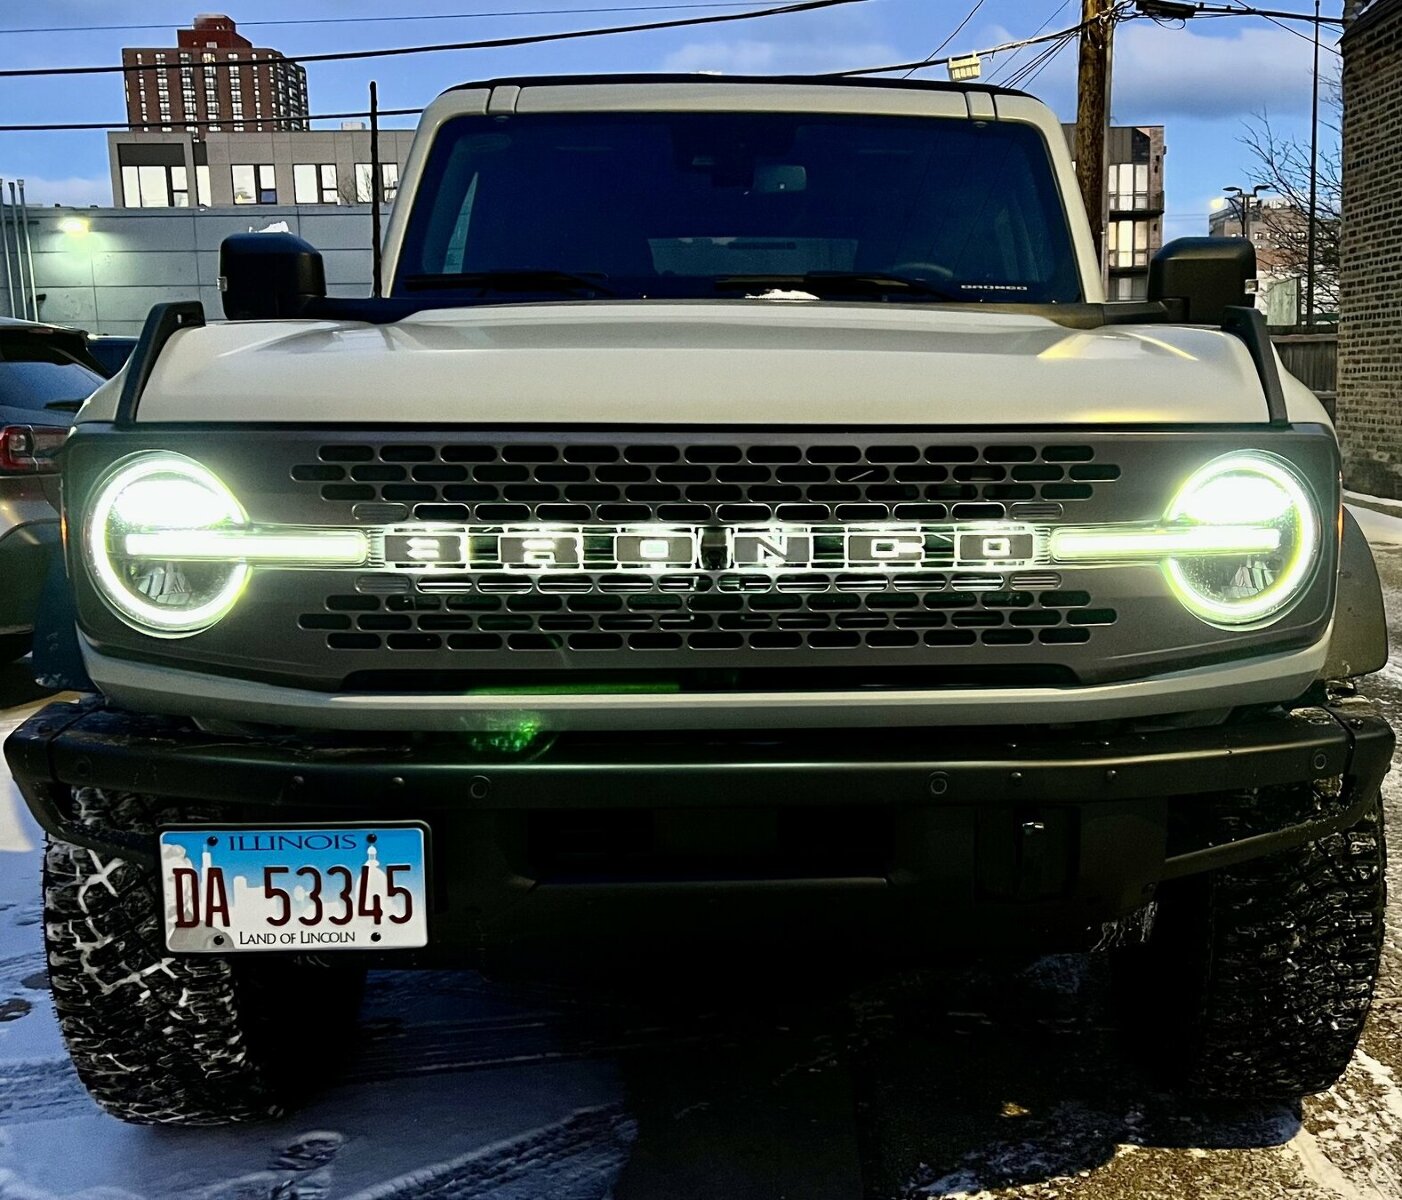 ORACLE Lighting 3140-V-001 Fits 2021-2023 Ford Bronco Universal Illuminated LED Letter Badges - Matte White Surface Finish - V